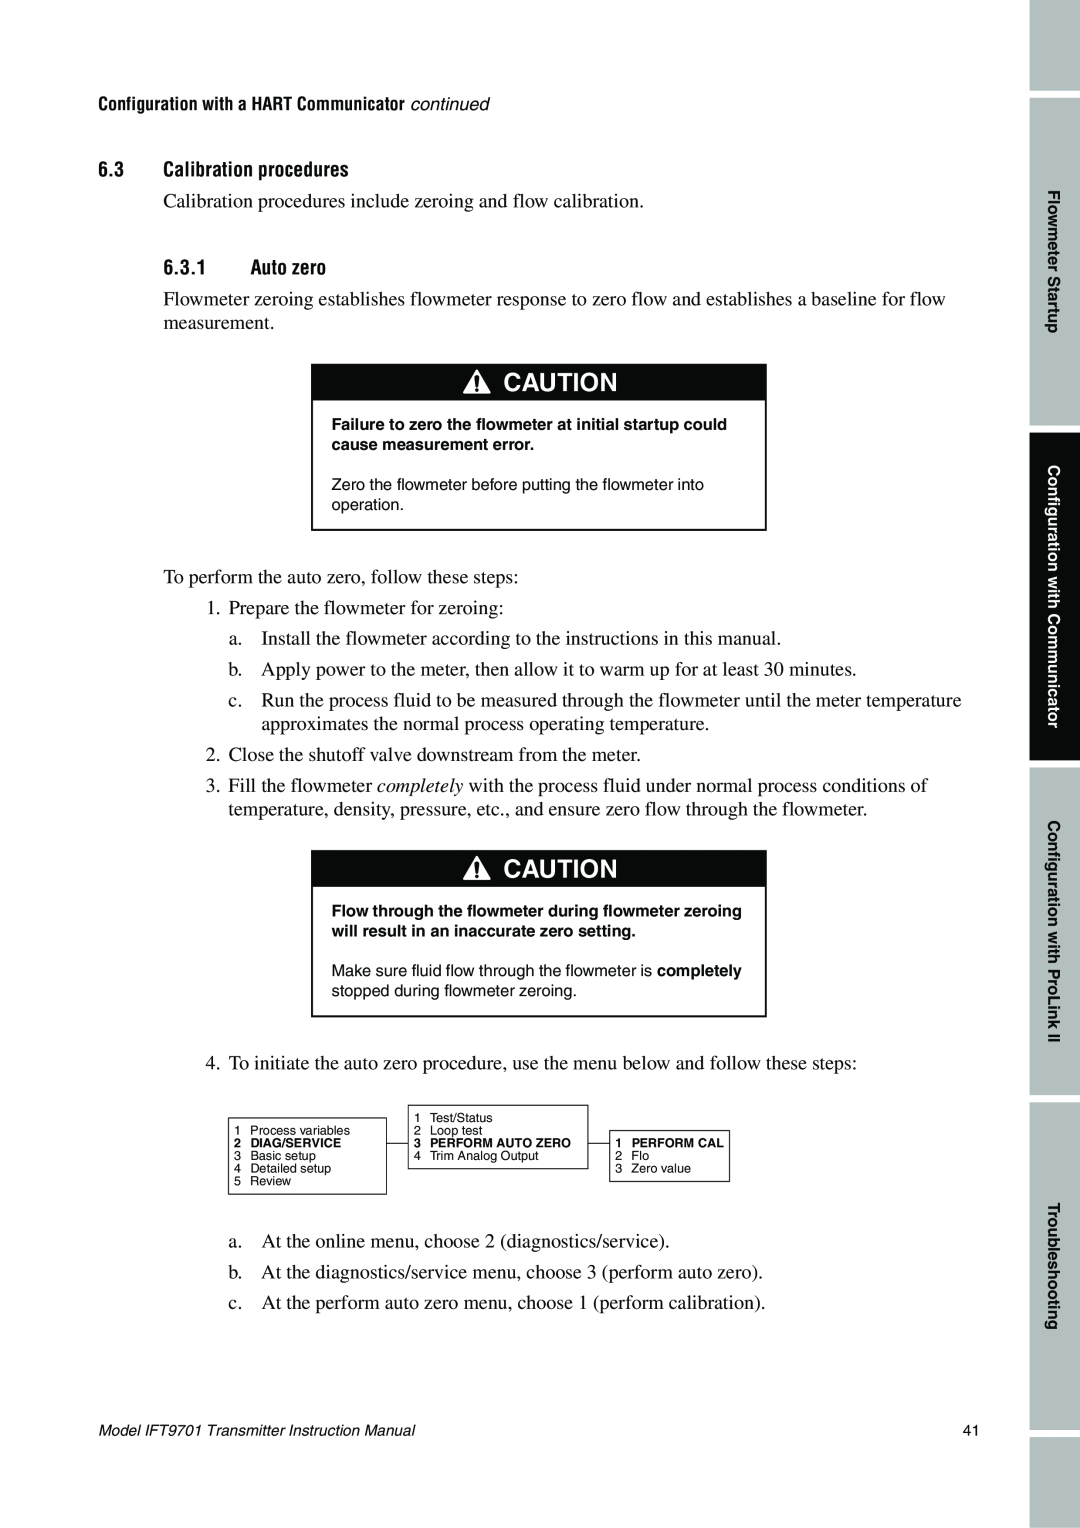 Emerson IFT9701 instruction manual 6.3Calibration procedures, 6.3.1Auto zero 